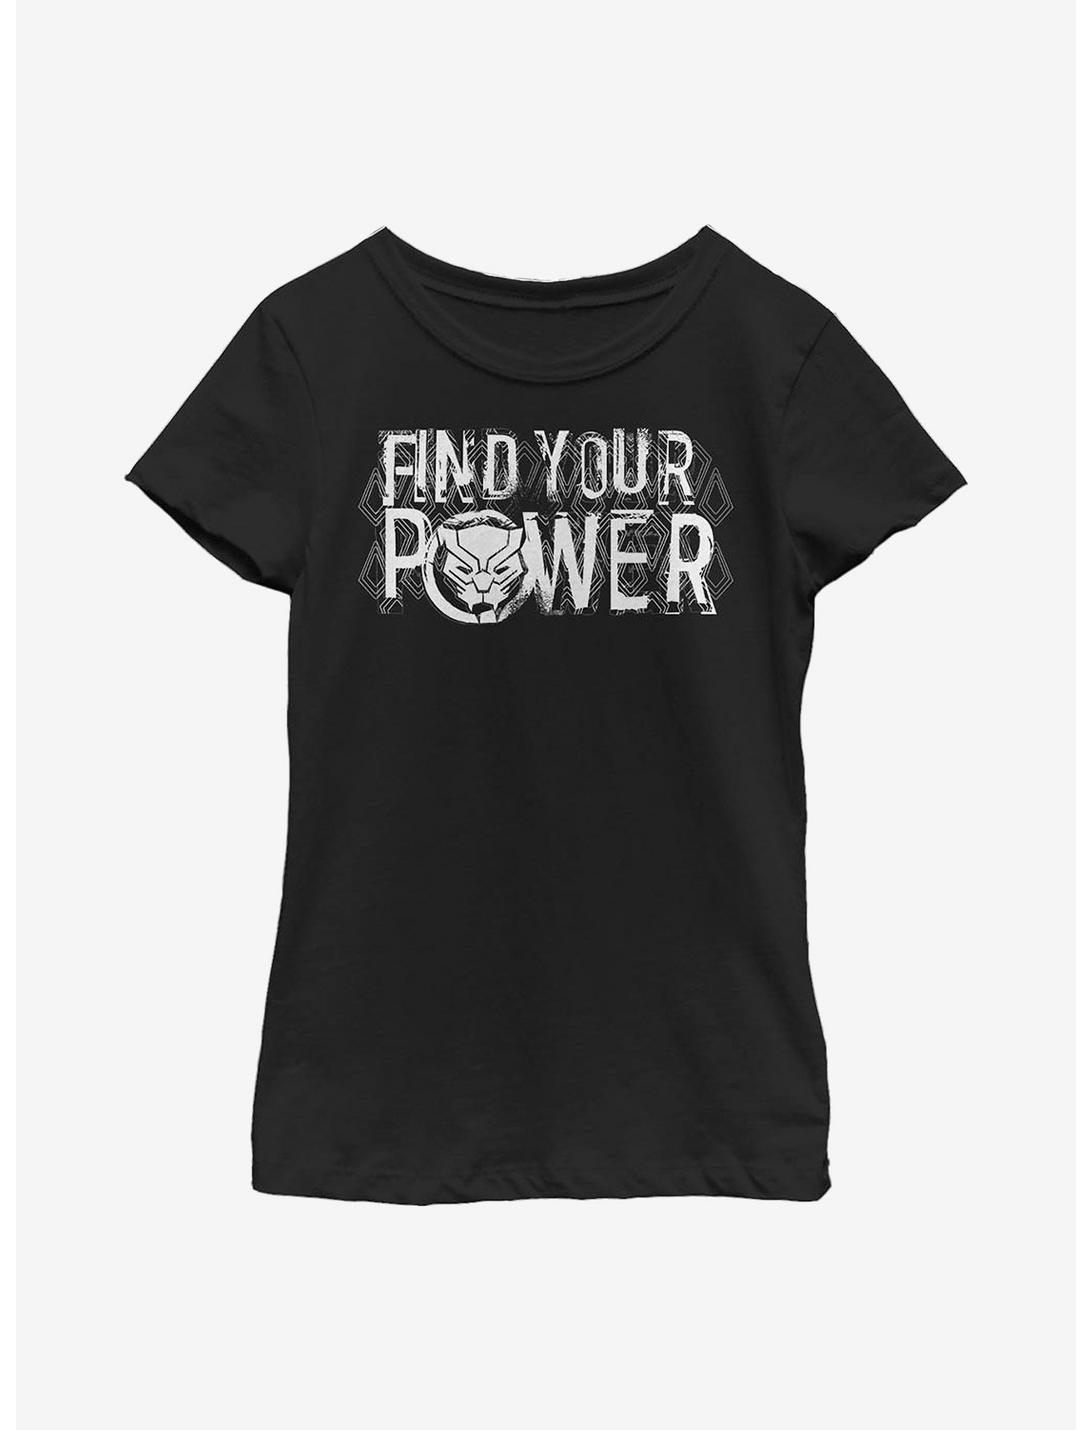 Marvel Black Panther Power Youth Girls T-Shirt, BLACK, hi-res